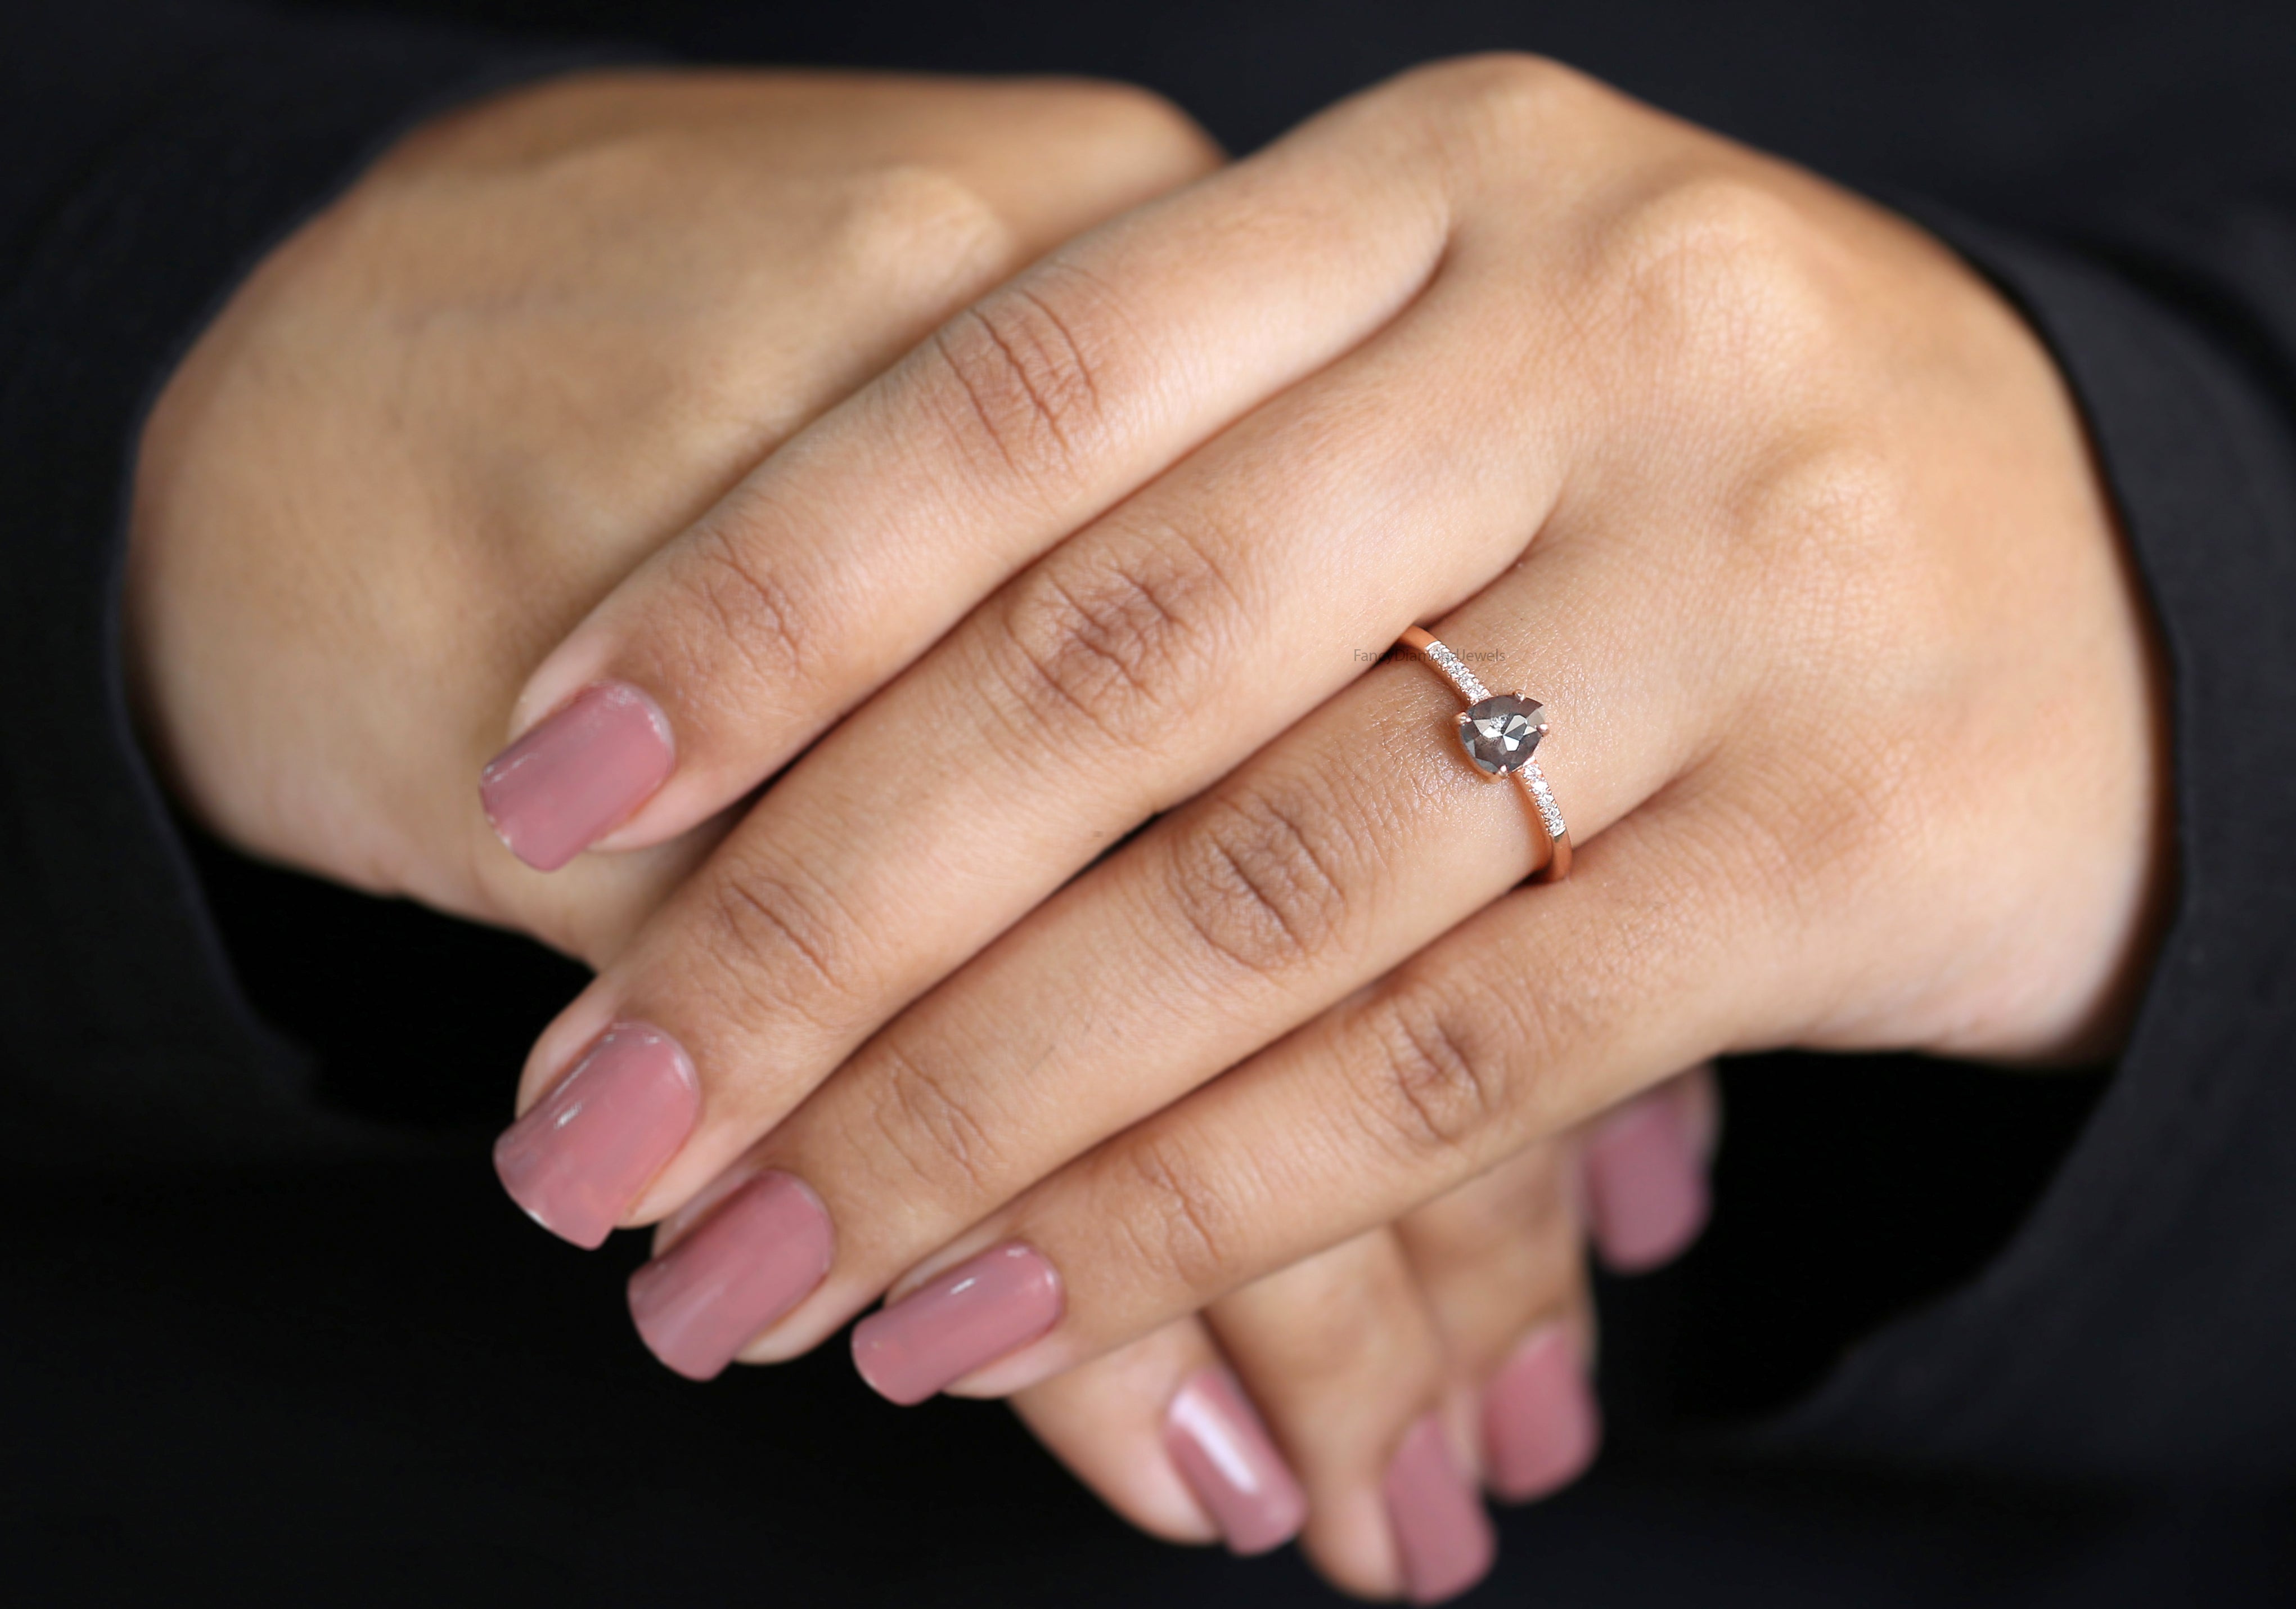 Heart Salt And Pepper Diamond Ring 0.39 Ct 5.80 MM Heart Shape Diamond Ring 14K Solid Rose Gold Silver Engagement Ring Gift For Her QL1746